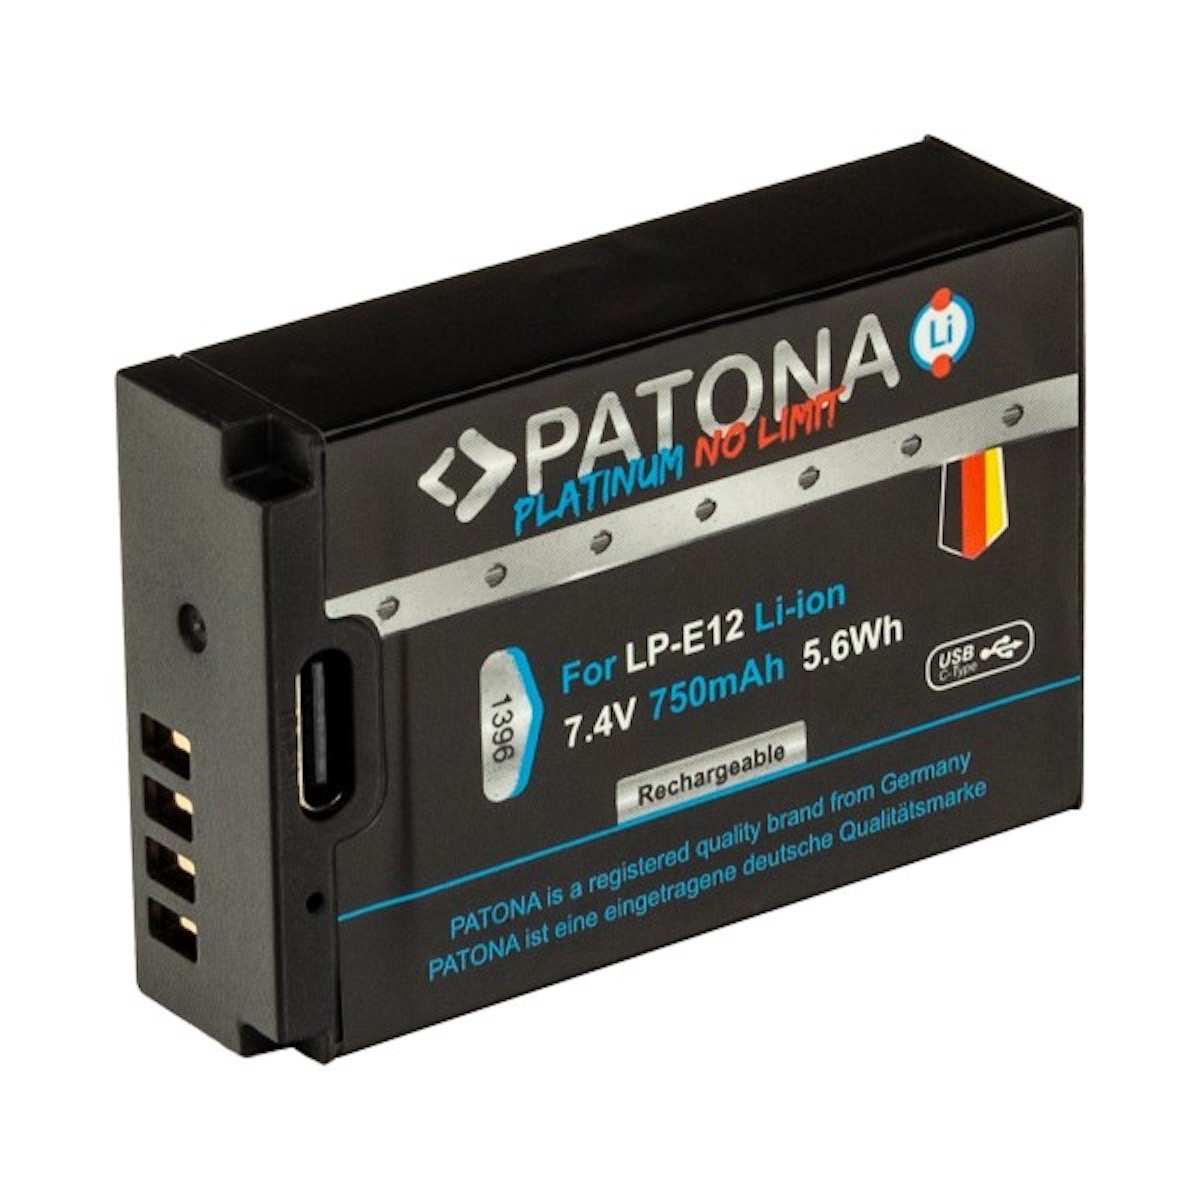 Patona Platinum Akku mit USB-C Input f. Canon LP-E12